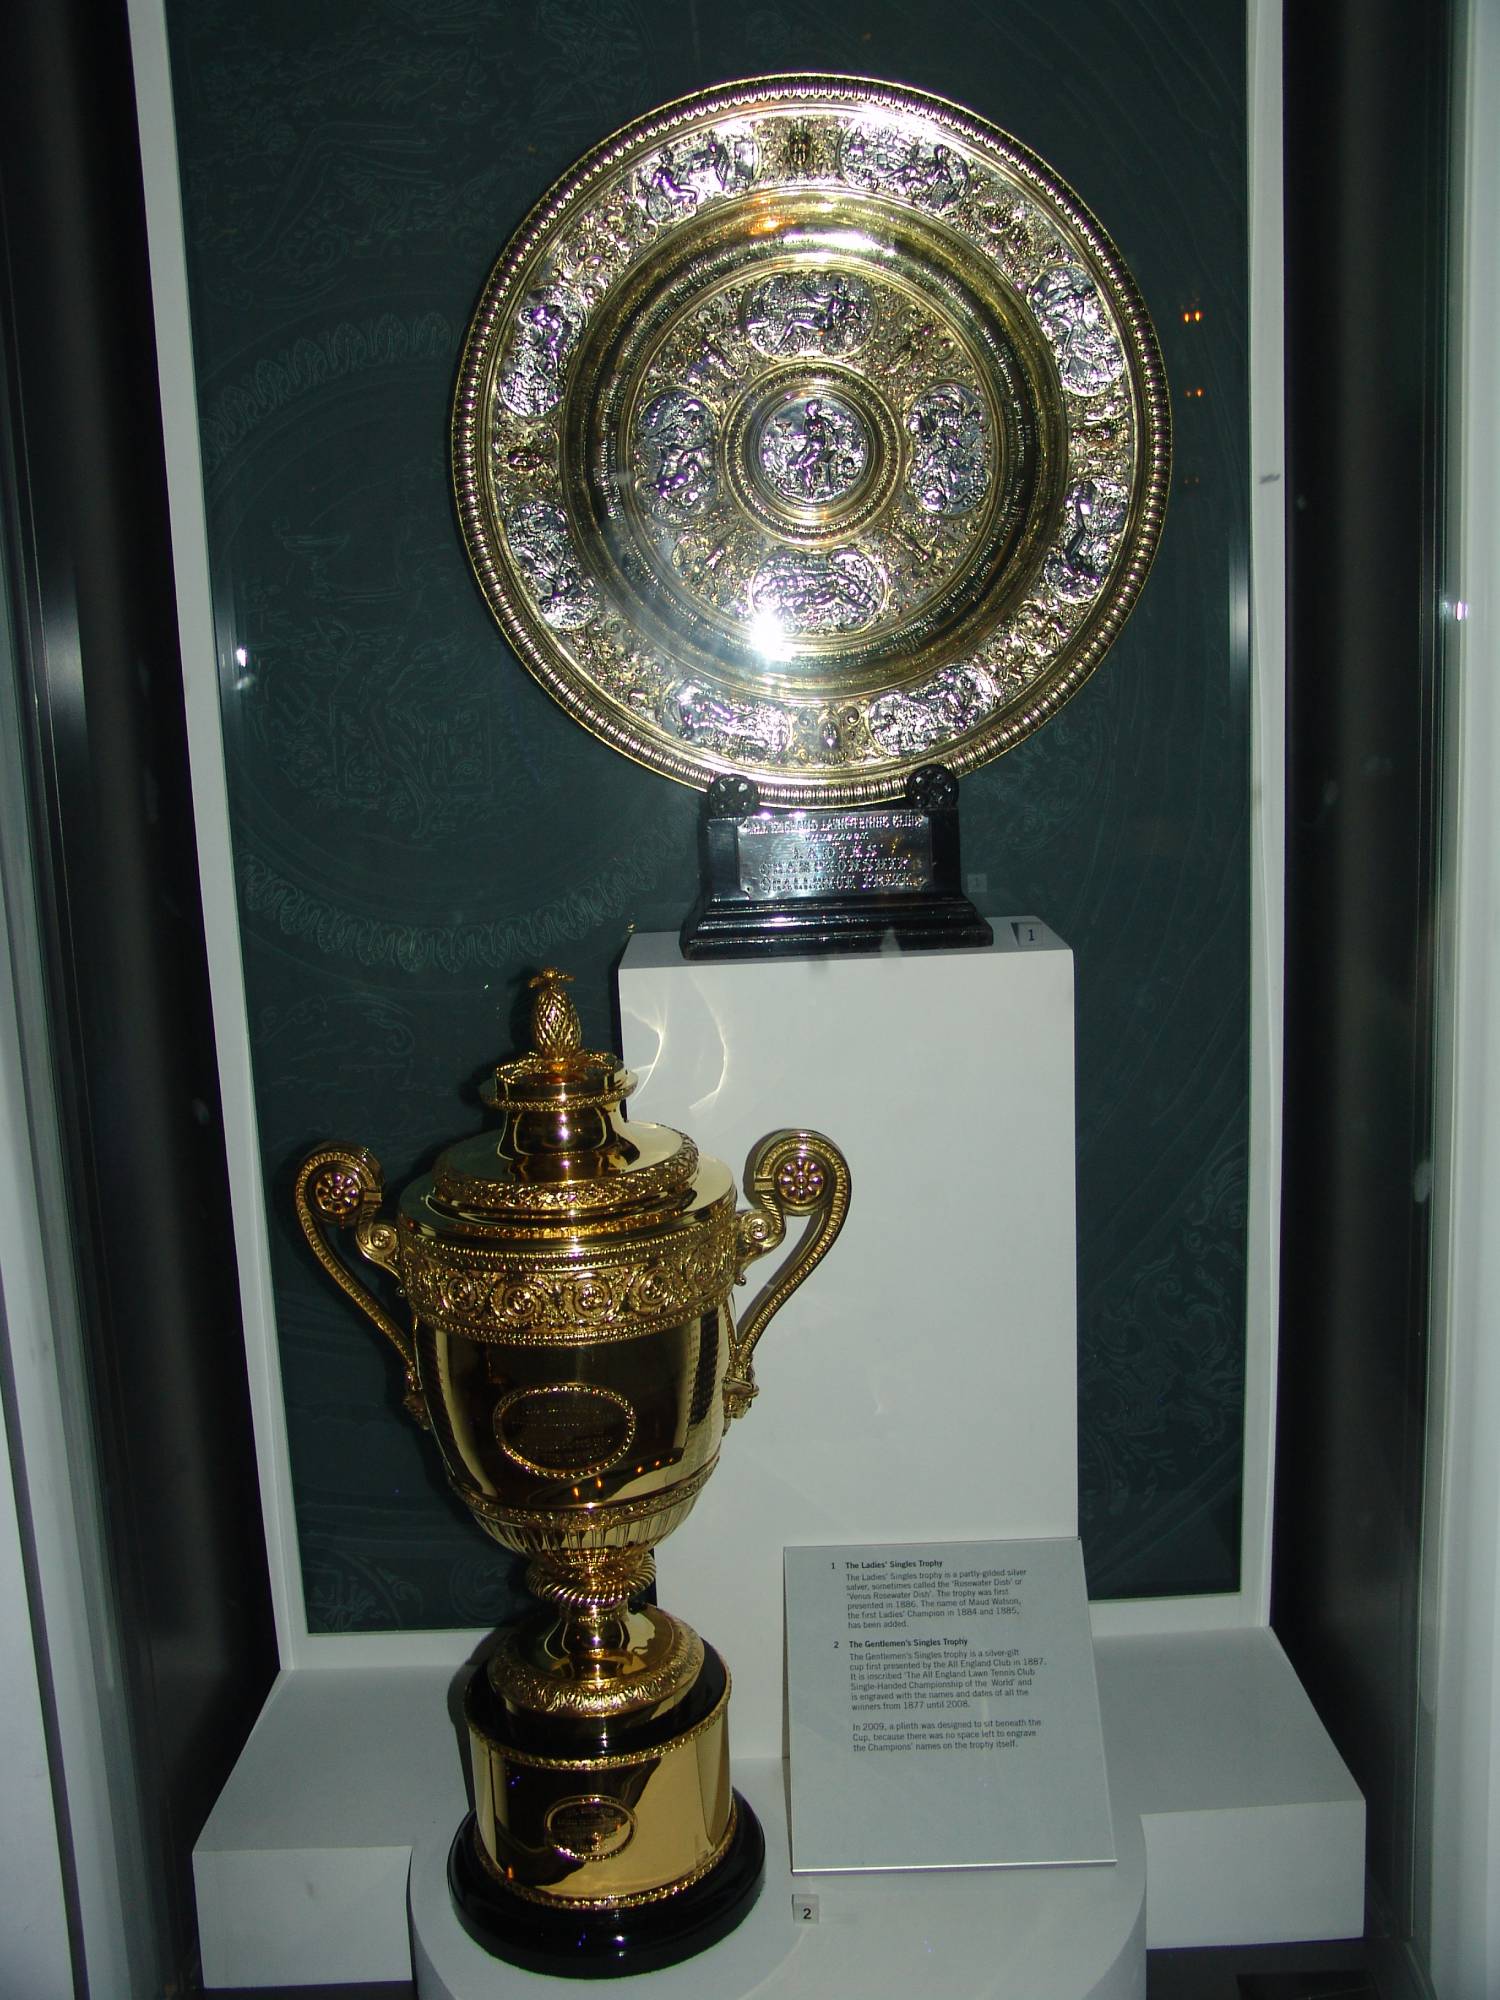 Learn more about Tennis at the Wimbledon Tennis Museum | PassPorter.com